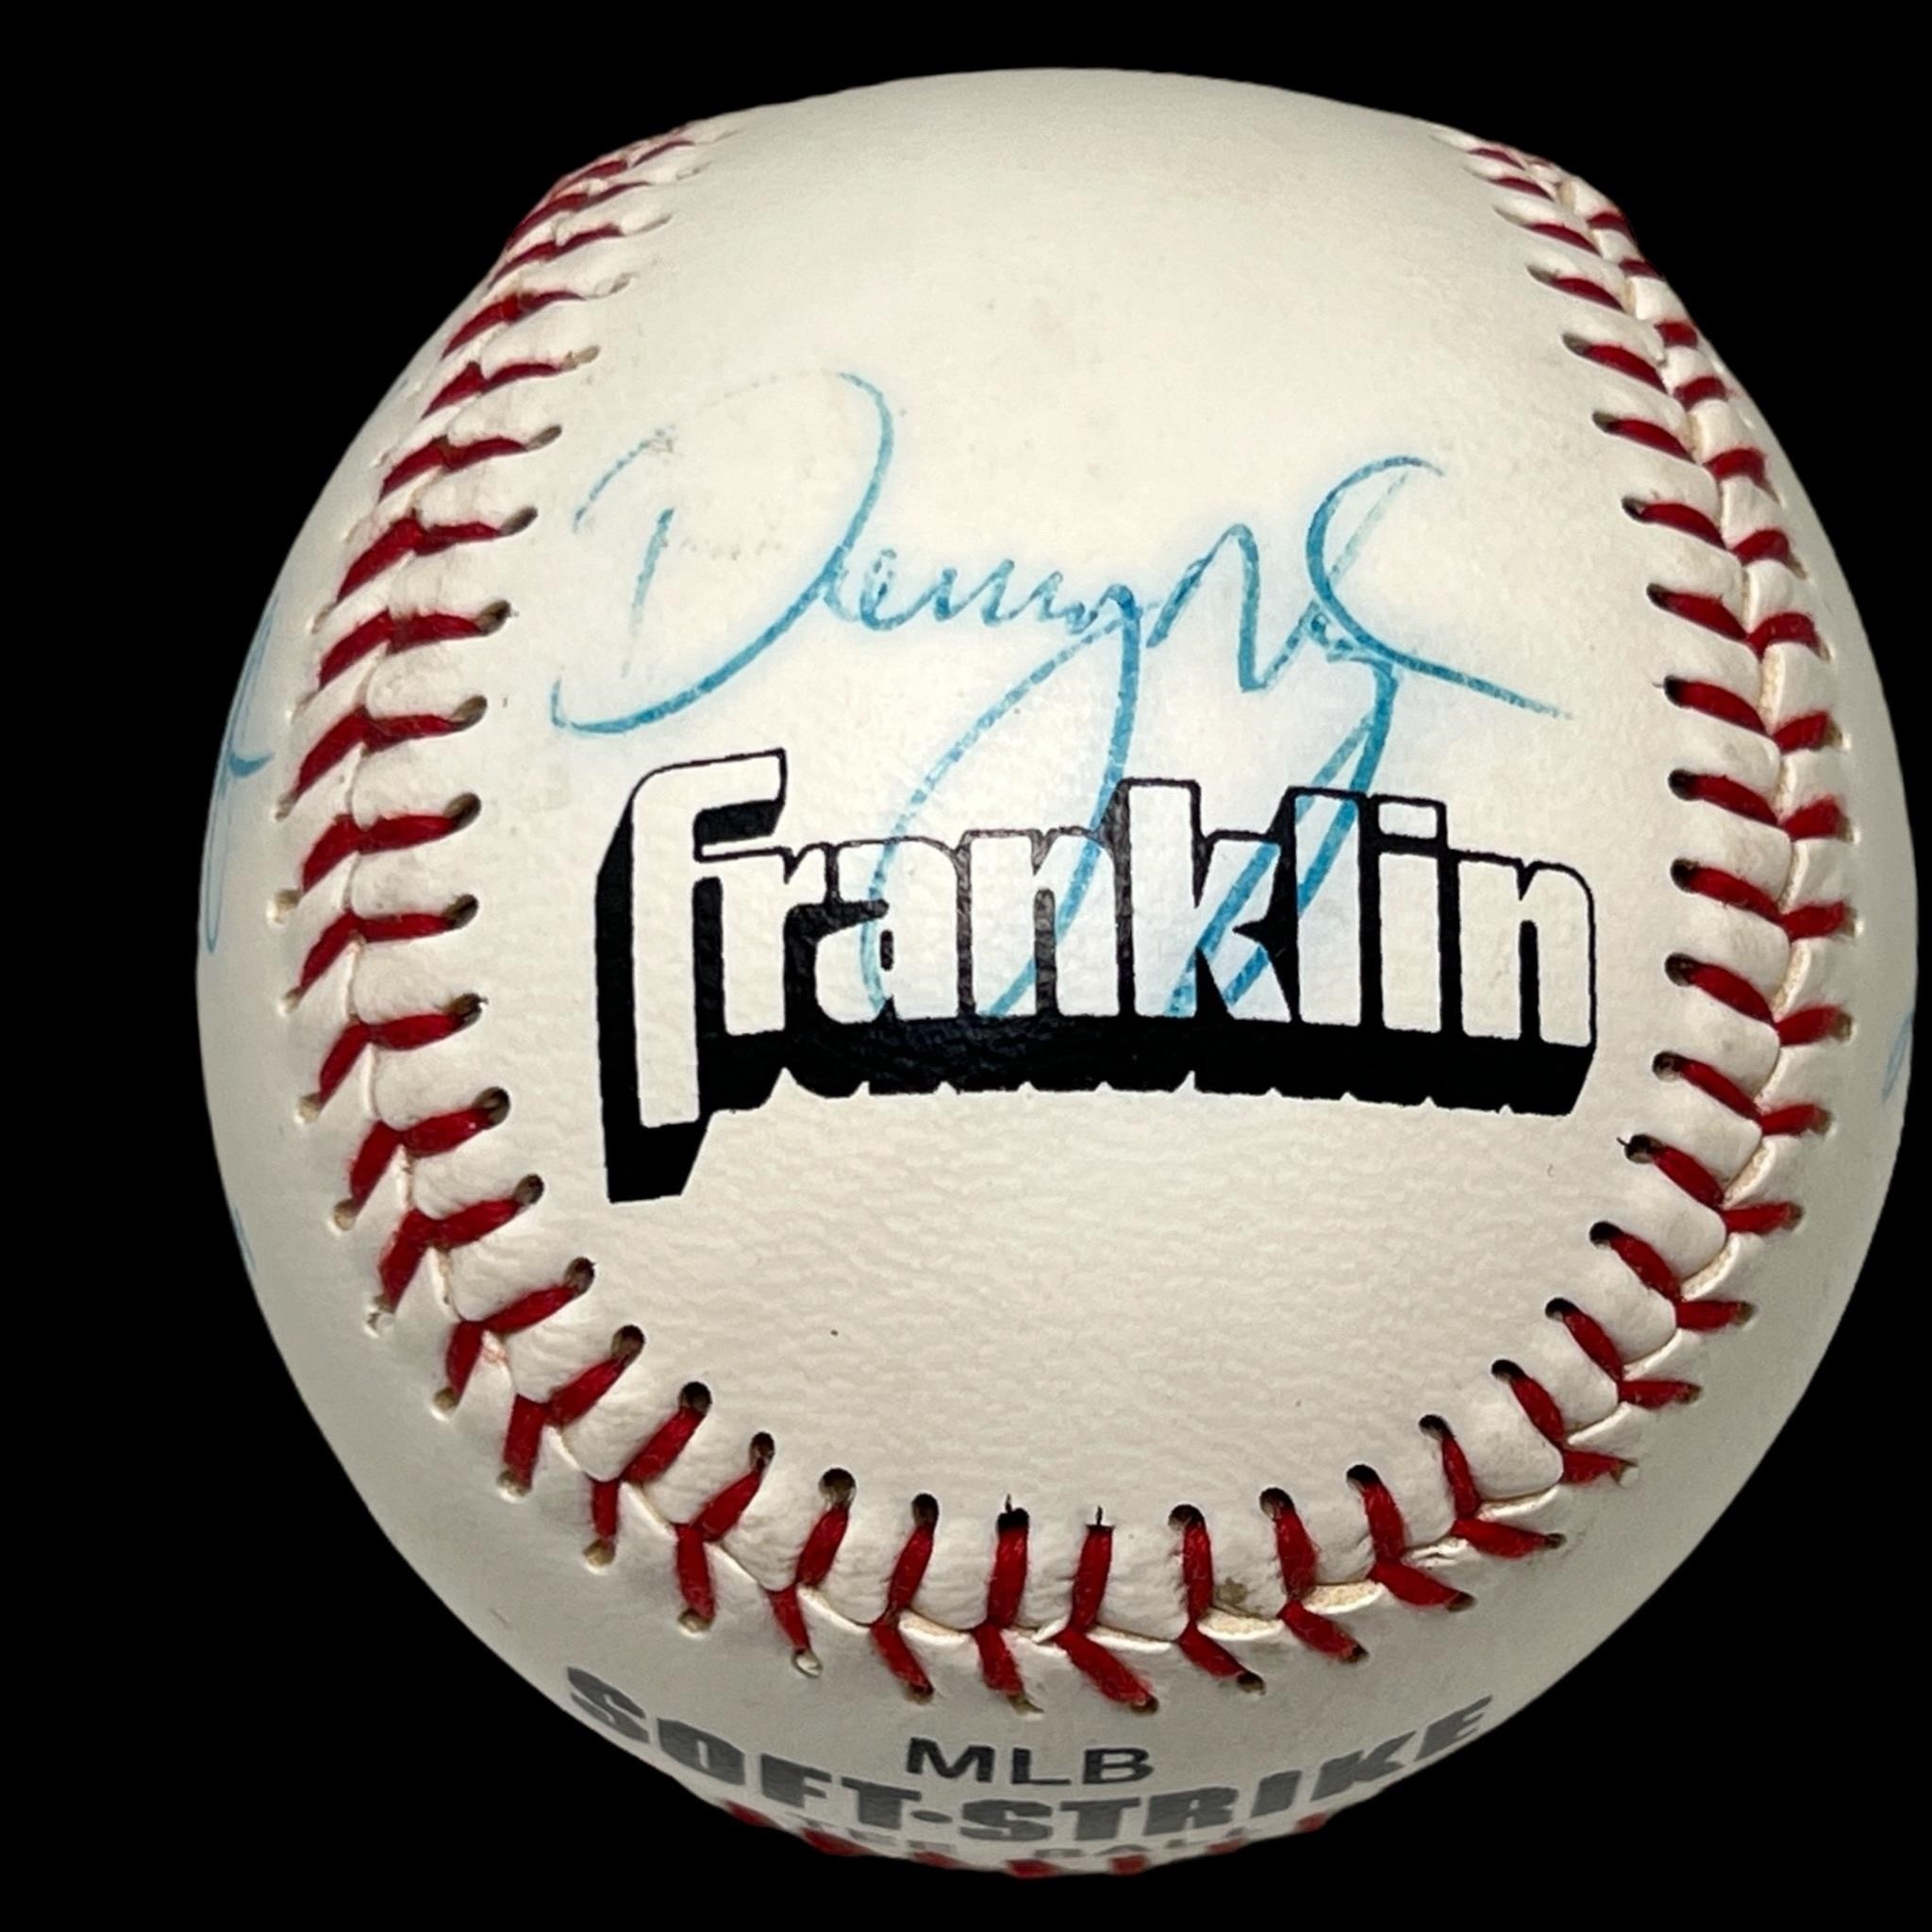 Autographed baseball - Denny Negle, Randy Timlin